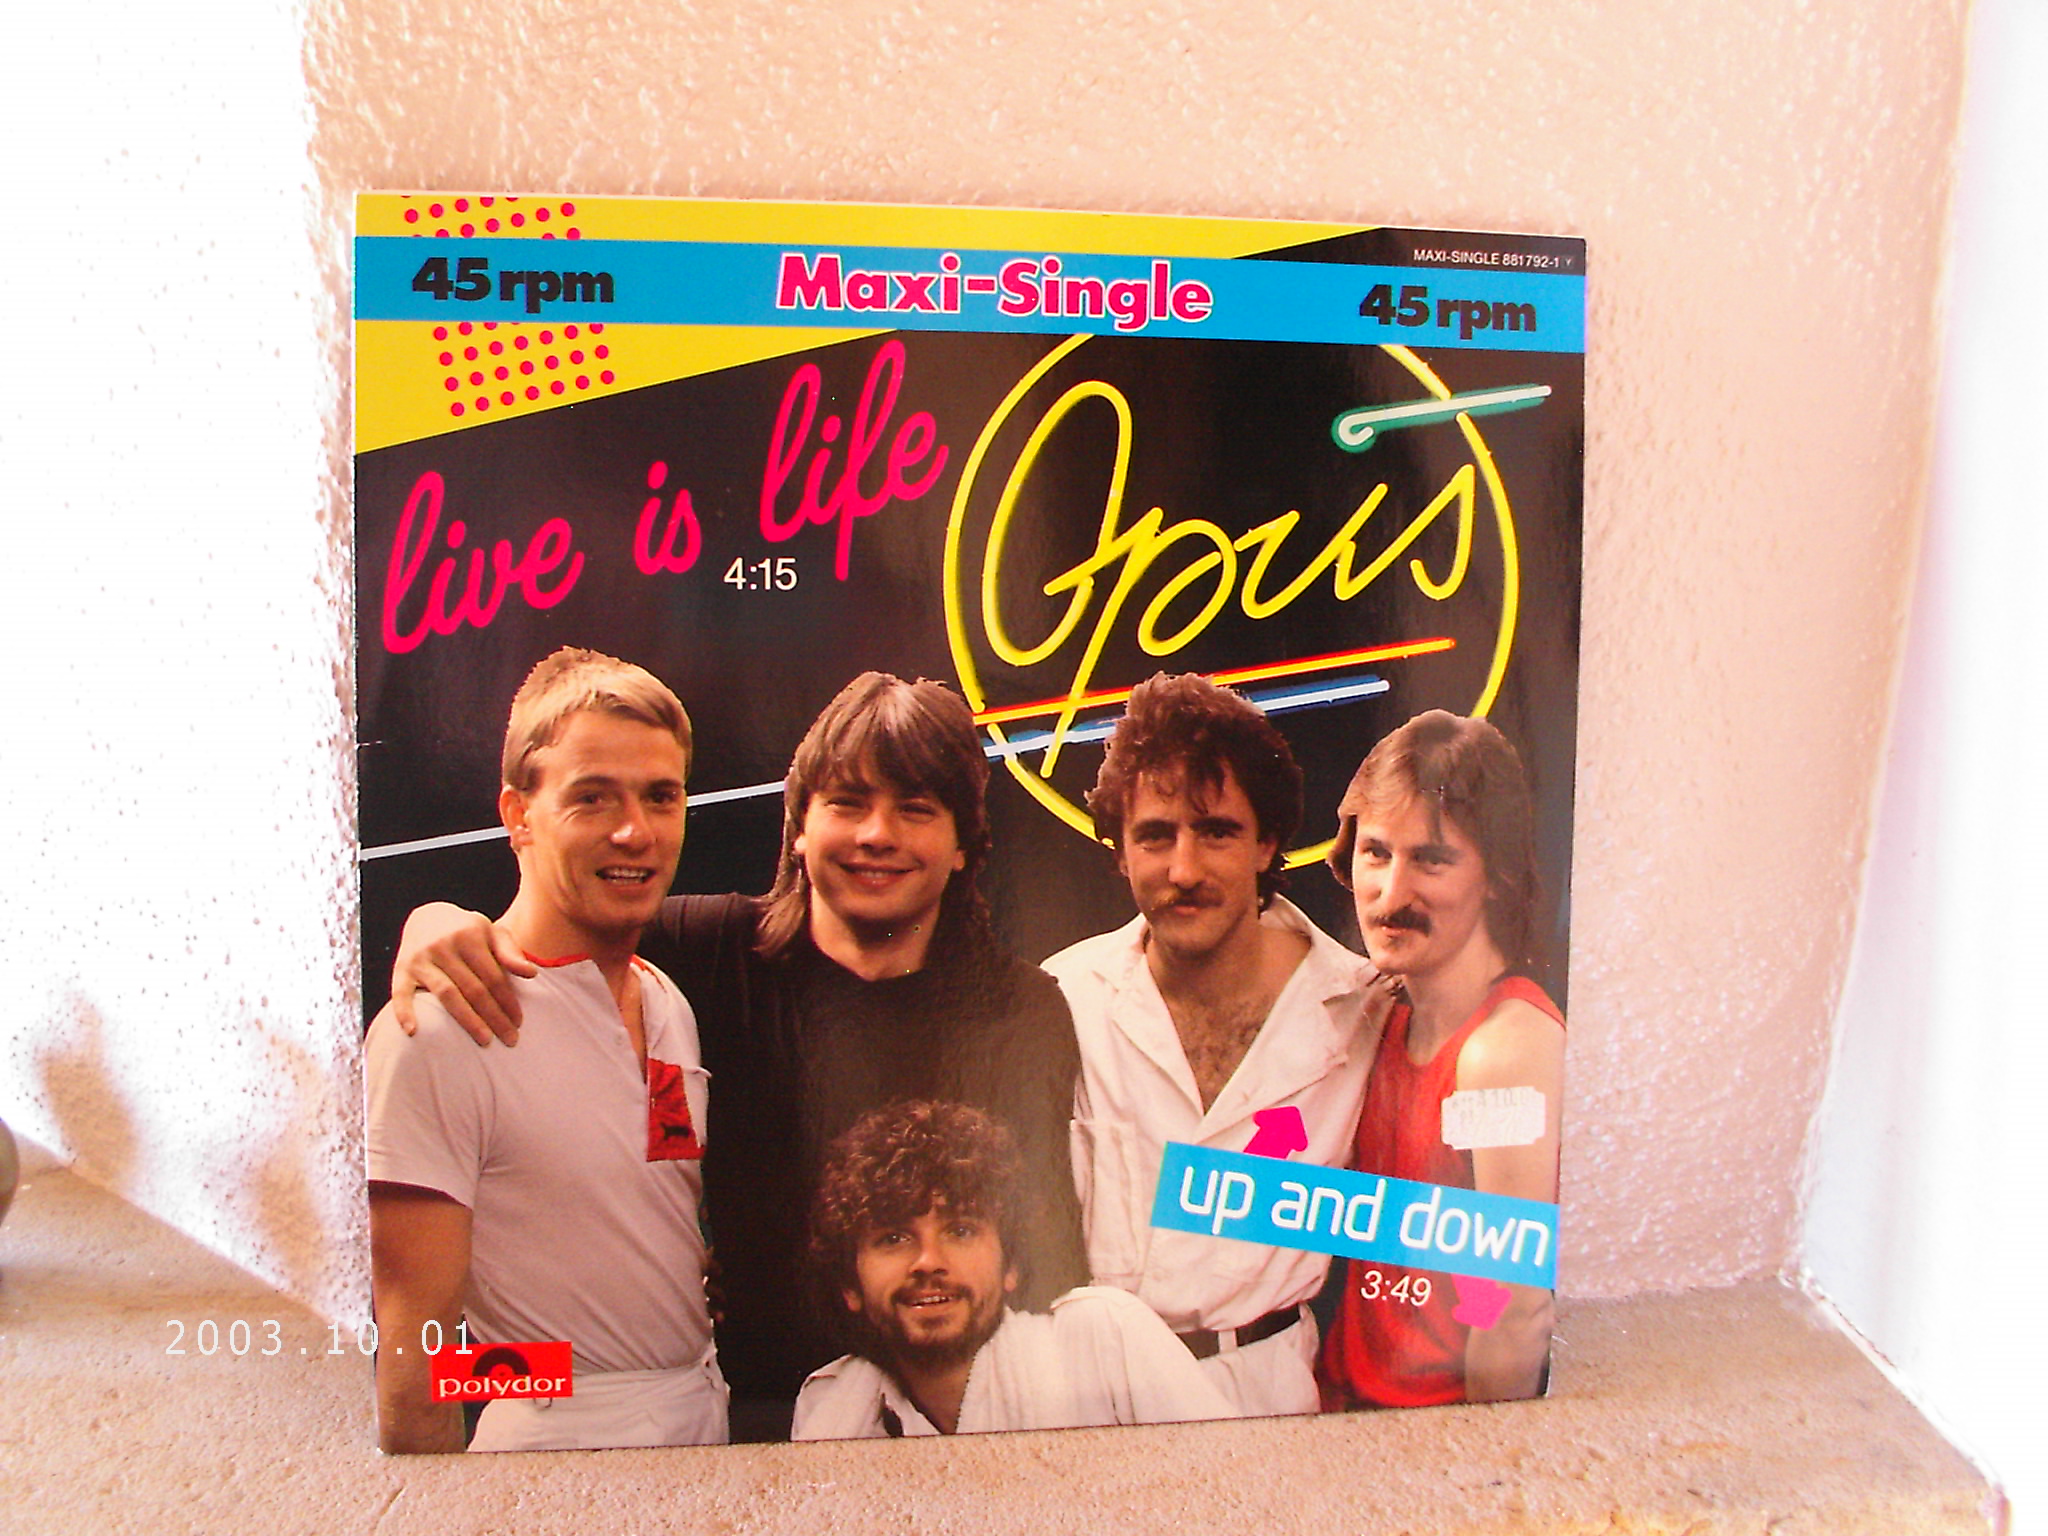 Opus live is life Maxi-Single